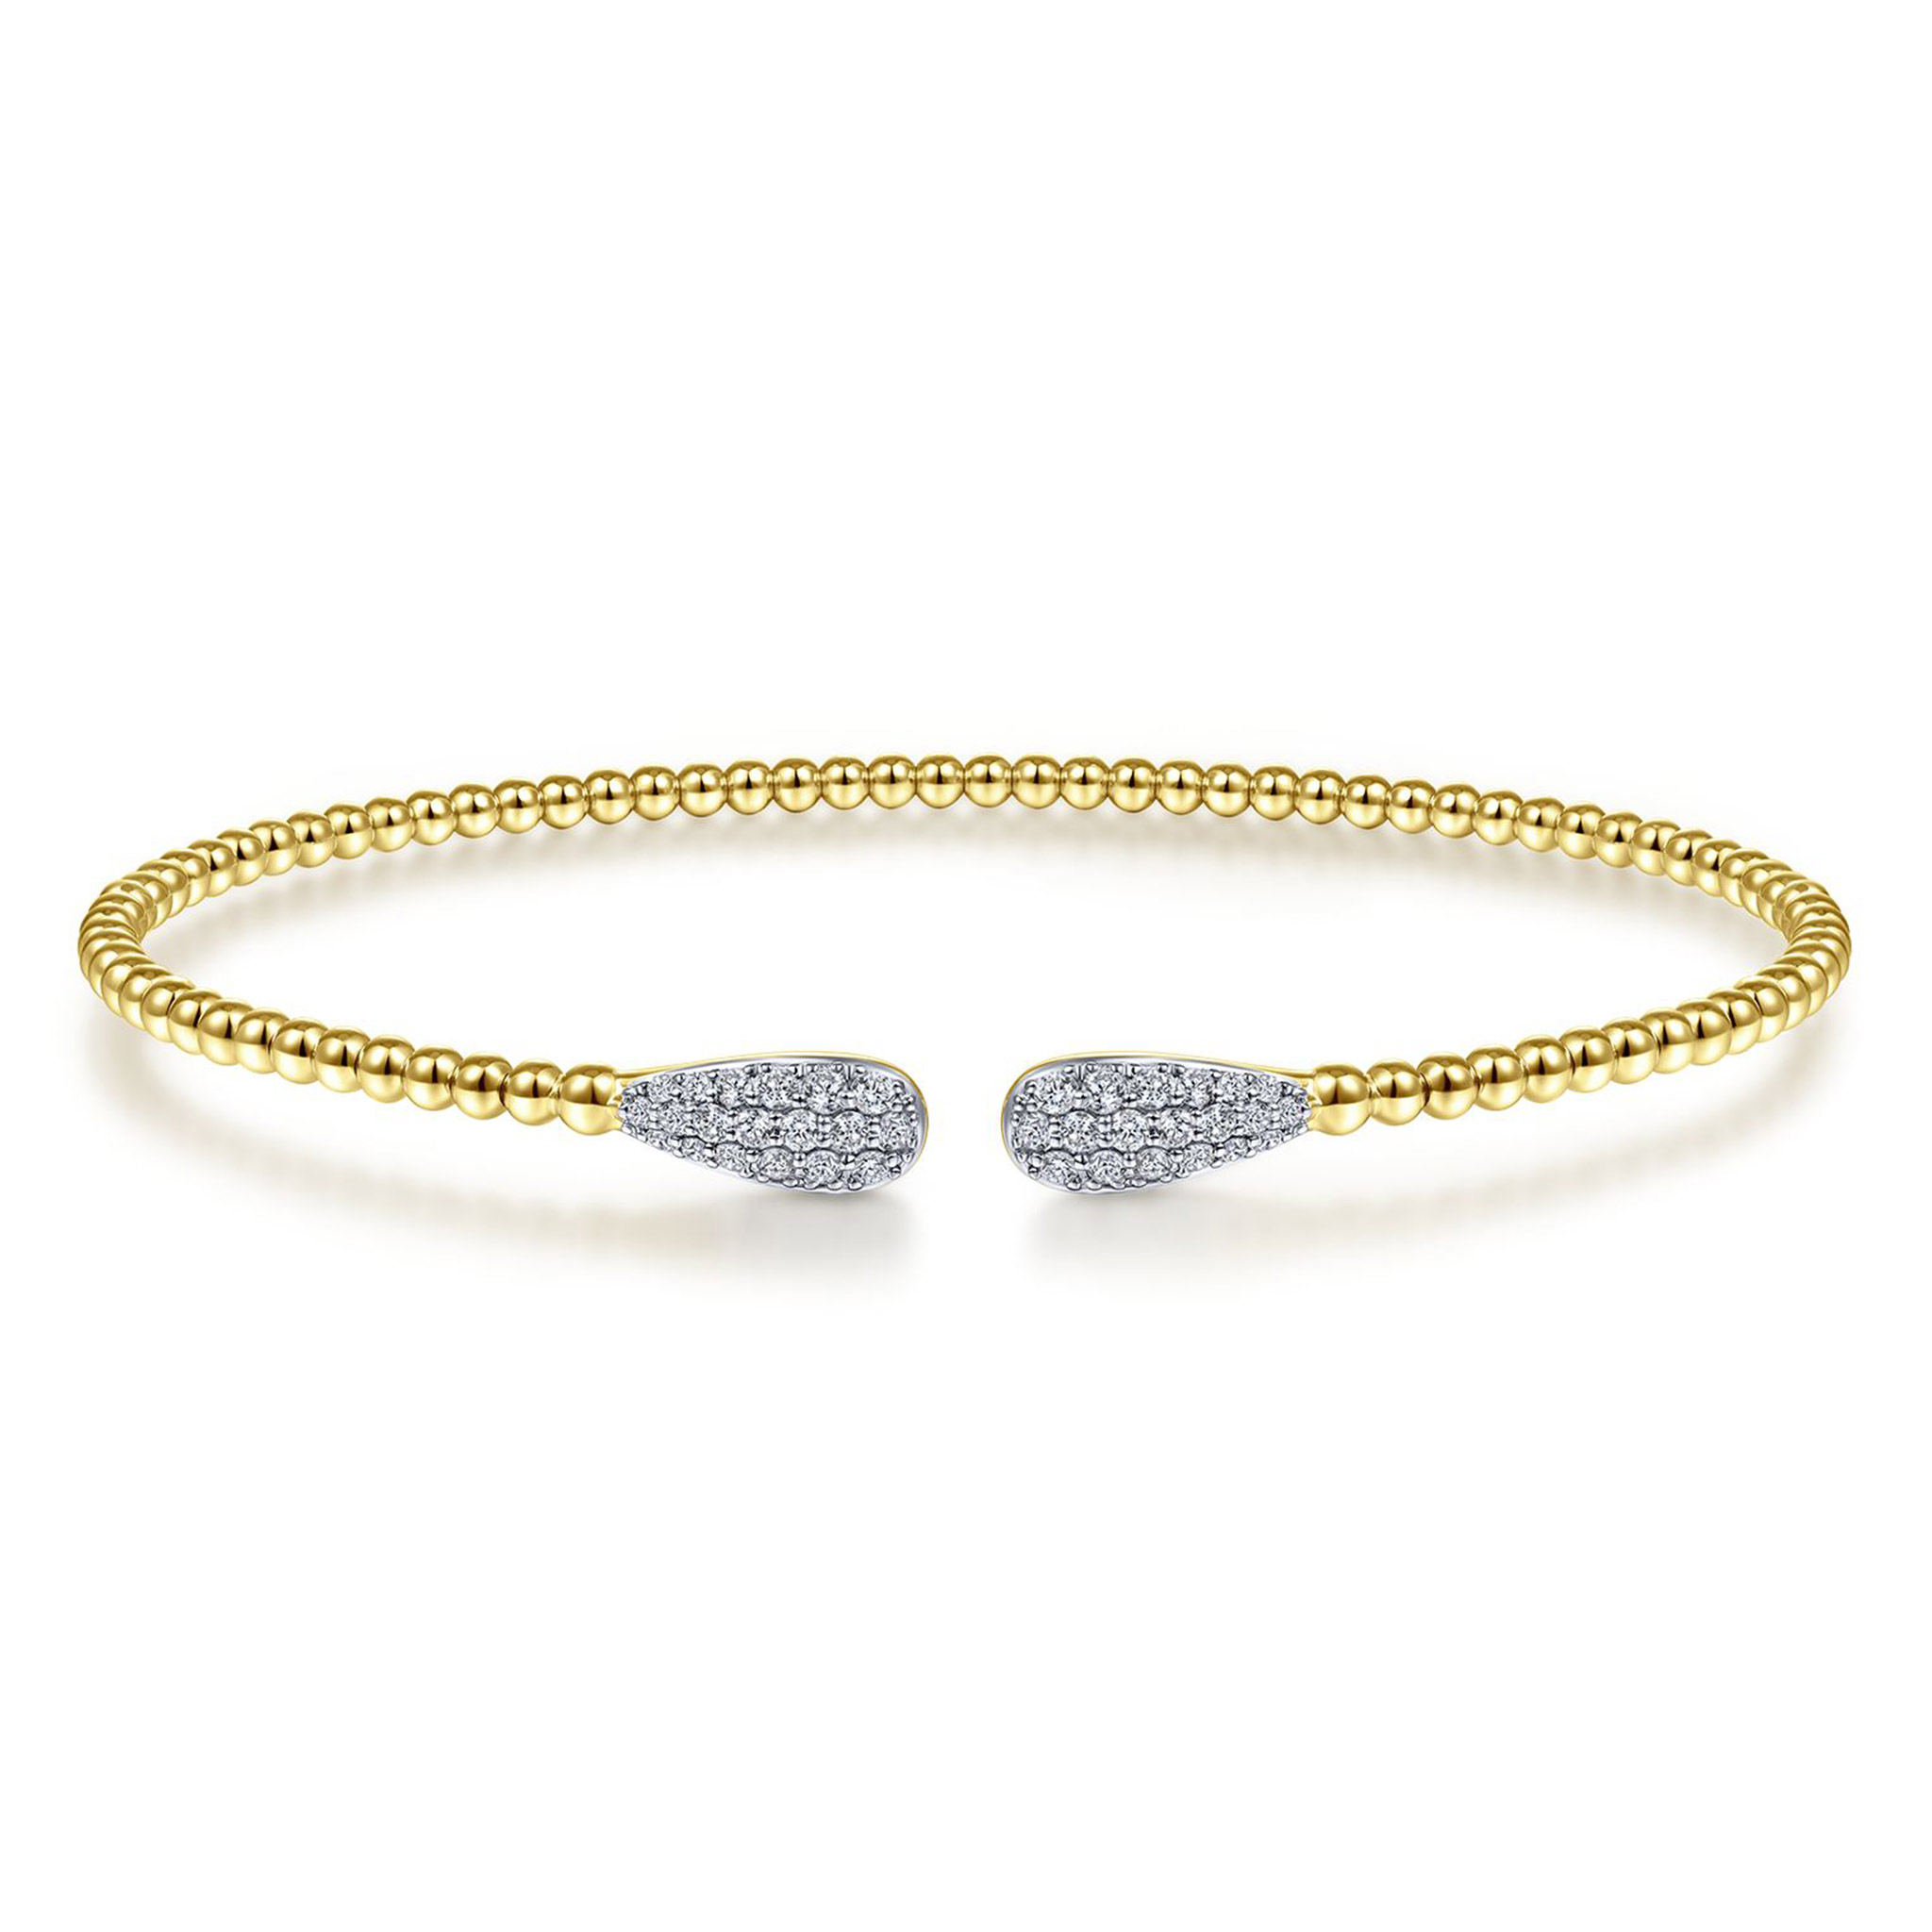 Beaded Bracelet Bangle with Oval Diamond Accents